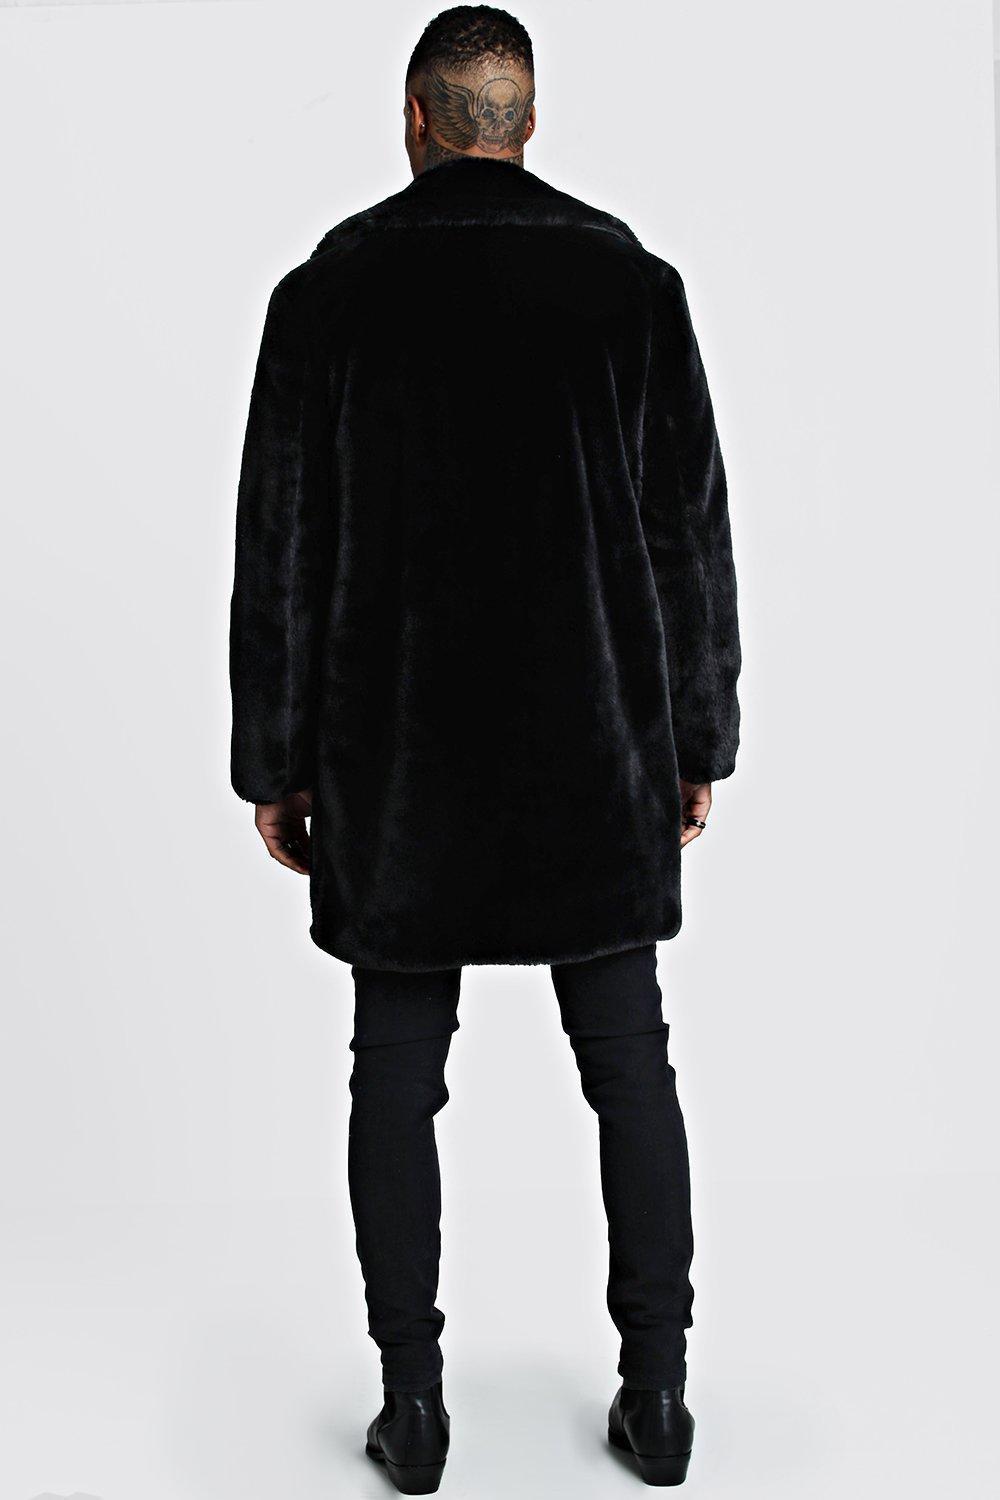 BoohooMAN Faux Fur Overcoat in Black for Men - Lyst